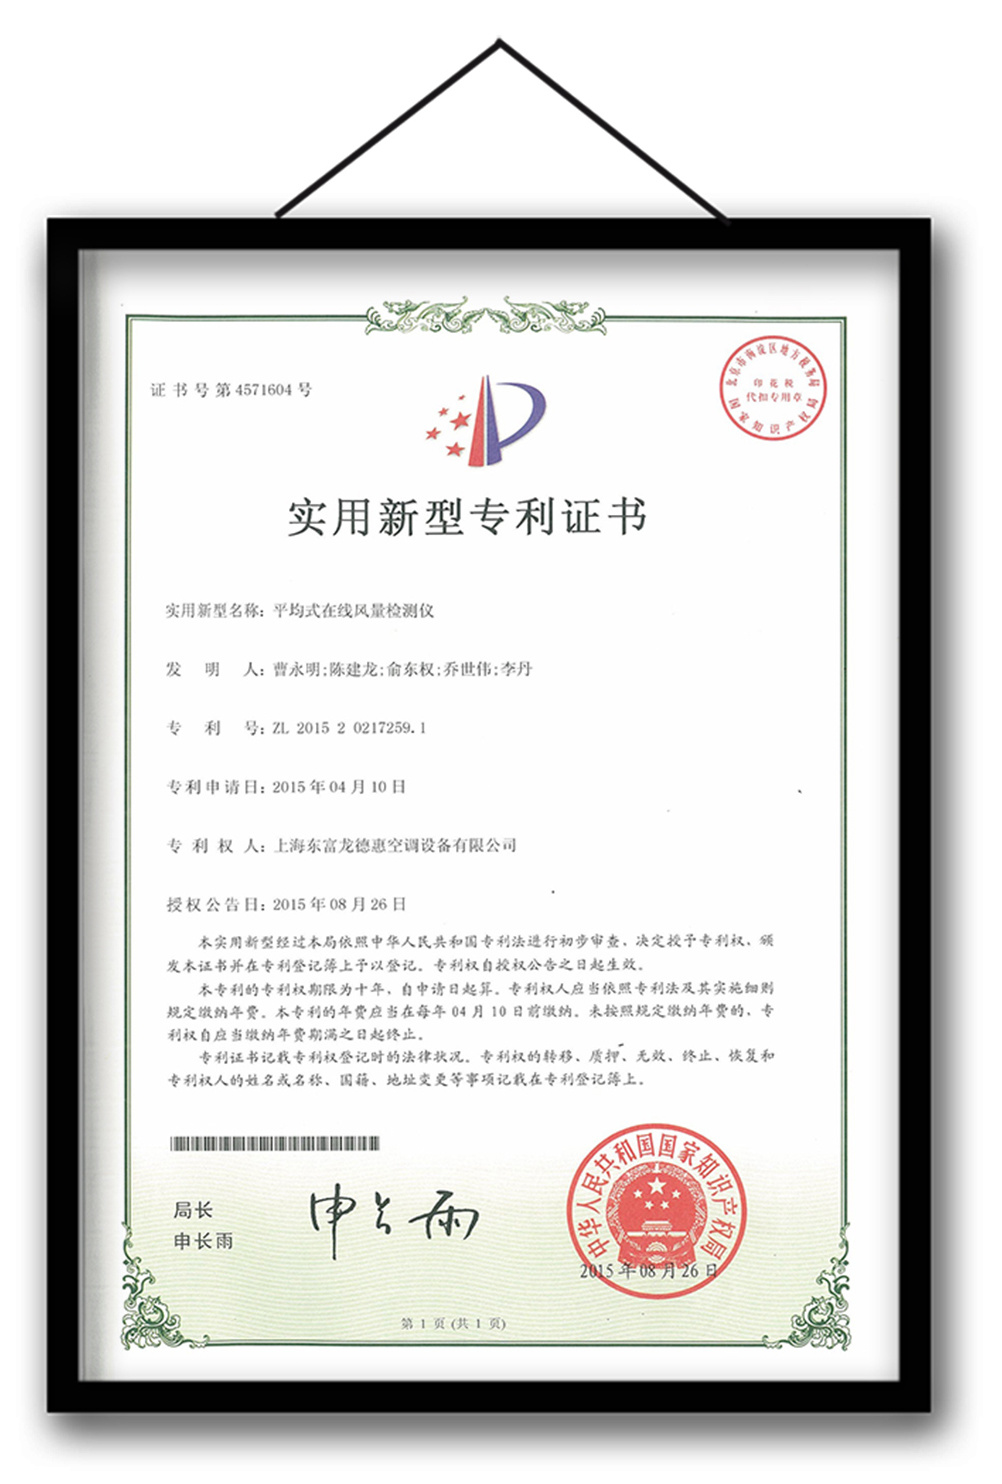 Patent certificate of online air volume detector